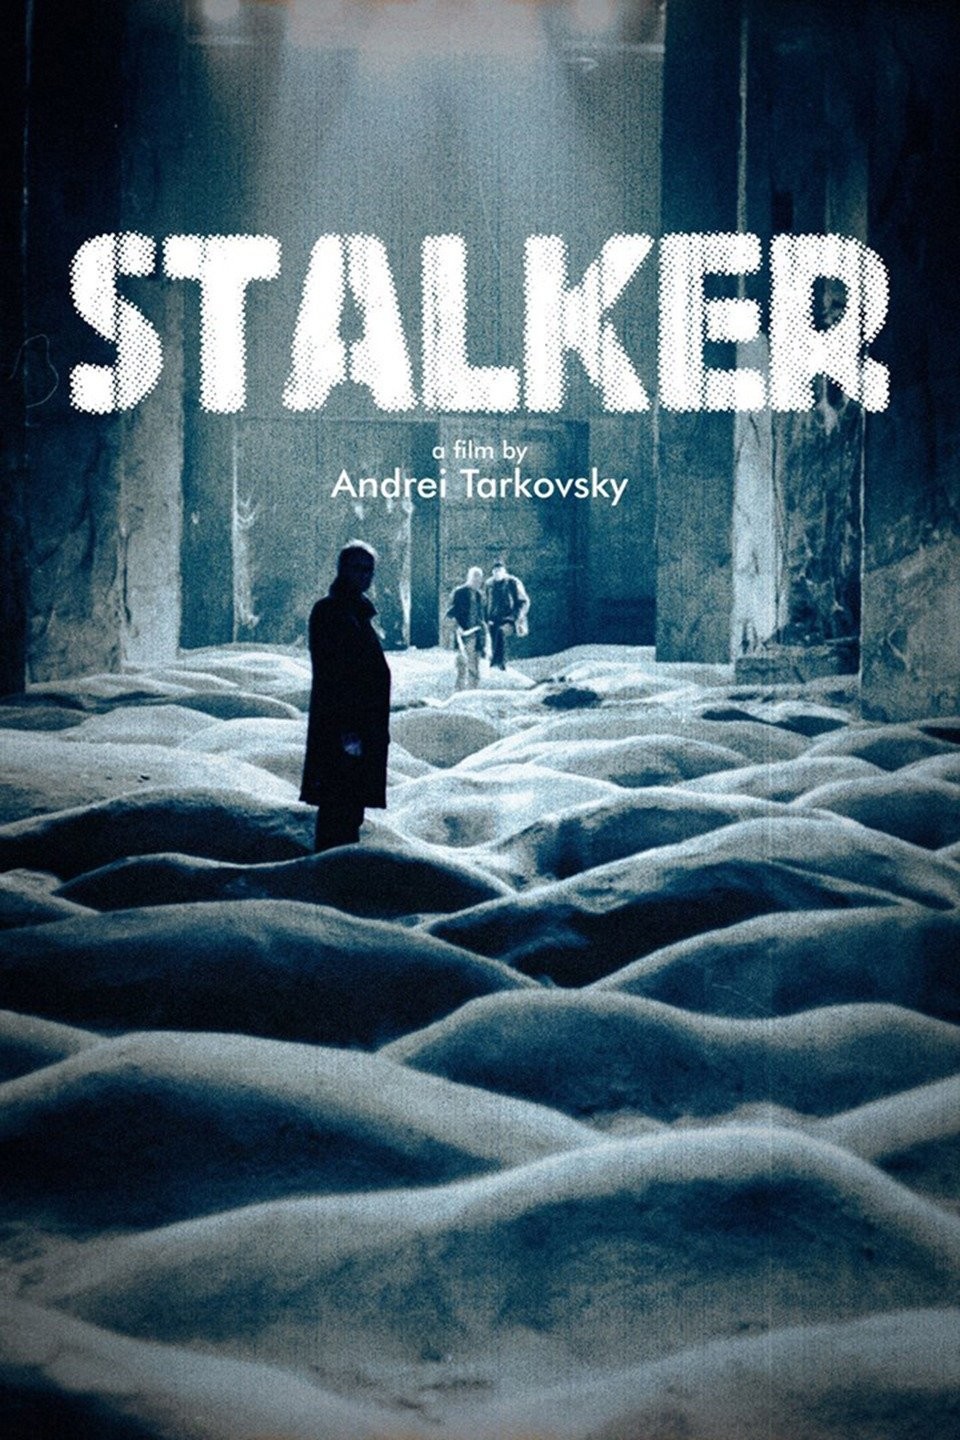 Killing Stalking: Synopsis, Characters and Seasons - science - 2023